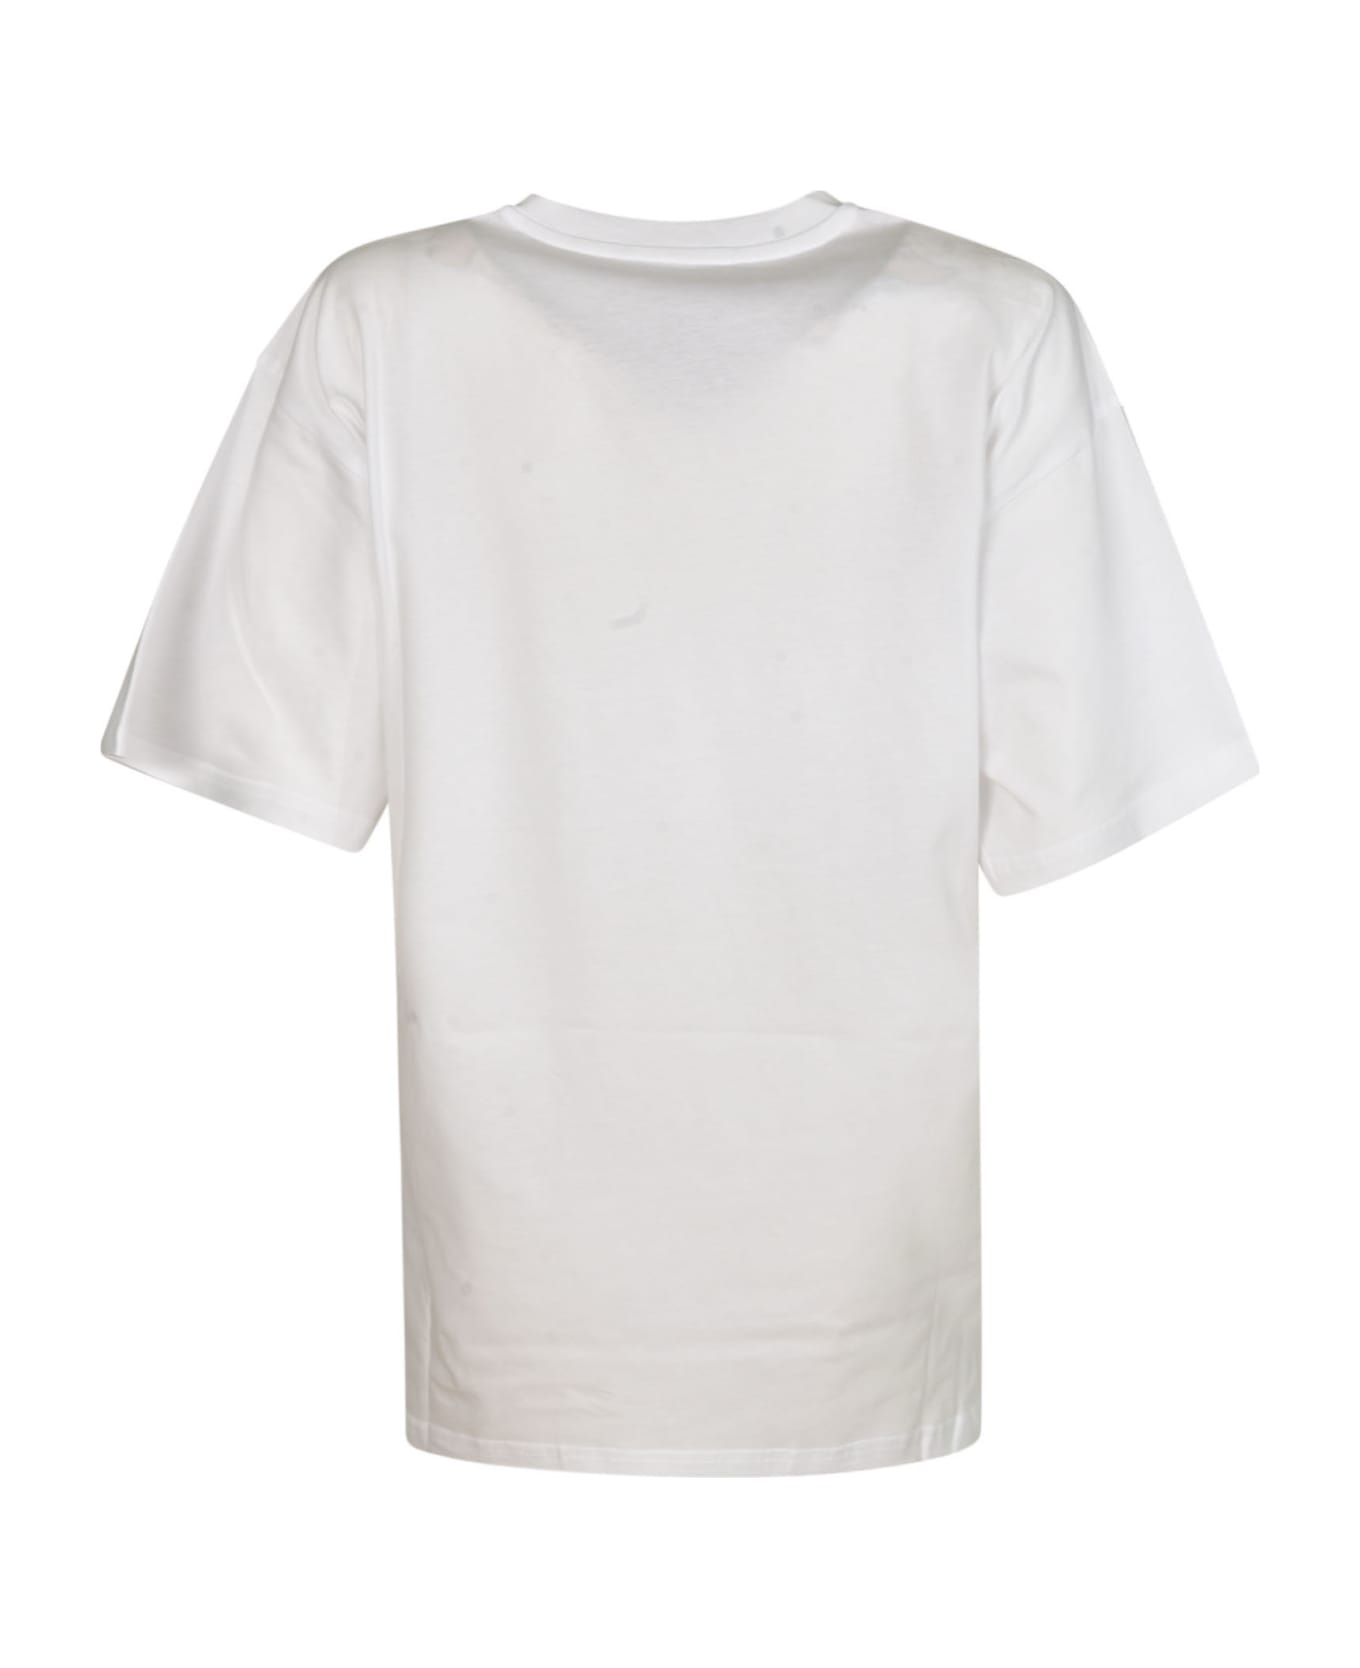 Moschino Logo Printed T-shirt - 1001 Tシャツ